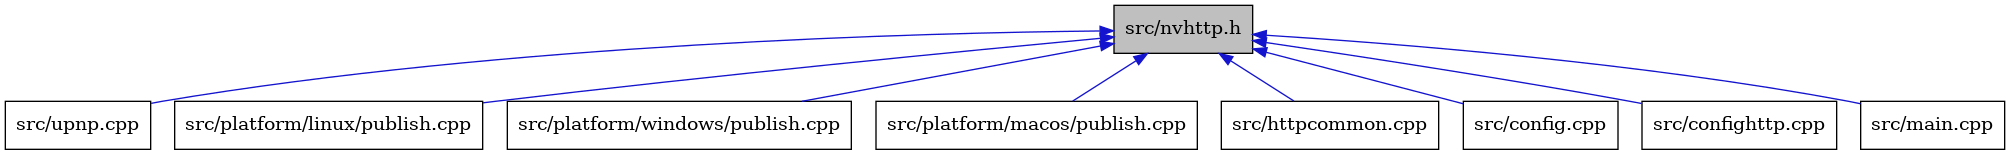 digraph {
    graph [bgcolor="#00000000"]
    node [shape=rectangle style=filled fillcolor="#FFFFFF" font=Helvetica padding=2]
    edge [color="#1414CE"]
    "9" [label="src/upnp.cpp" tooltip="src/upnp.cpp"]
    "6" [label="src/platform/linux/publish.cpp" tooltip="src/platform/linux/publish.cpp"]
    "8" [label="src/platform/windows/publish.cpp" tooltip="src/platform/windows/publish.cpp"]
    "1" [label="src/nvhttp.h" tooltip="src/nvhttp.h" fillcolor="#BFBFBF"]
    "7" [label="src/platform/macos/publish.cpp" tooltip="src/platform/macos/publish.cpp"]
    "4" [label="src/httpcommon.cpp" tooltip="src/httpcommon.cpp"]
    "2" [label="src/config.cpp" tooltip="src/config.cpp"]
    "3" [label="src/confighttp.cpp" tooltip="src/confighttp.cpp"]
    "5" [label="src/main.cpp" tooltip="src/main.cpp"]
    "1" -> "2" [dir=back tooltip="include"]
    "1" -> "3" [dir=back tooltip="include"]
    "1" -> "4" [dir=back tooltip="include"]
    "1" -> "5" [dir=back tooltip="include"]
    "1" -> "6" [dir=back tooltip="include"]
    "1" -> "7" [dir=back tooltip="include"]
    "1" -> "8" [dir=back tooltip="include"]
    "1" -> "9" [dir=back tooltip="include"]
}